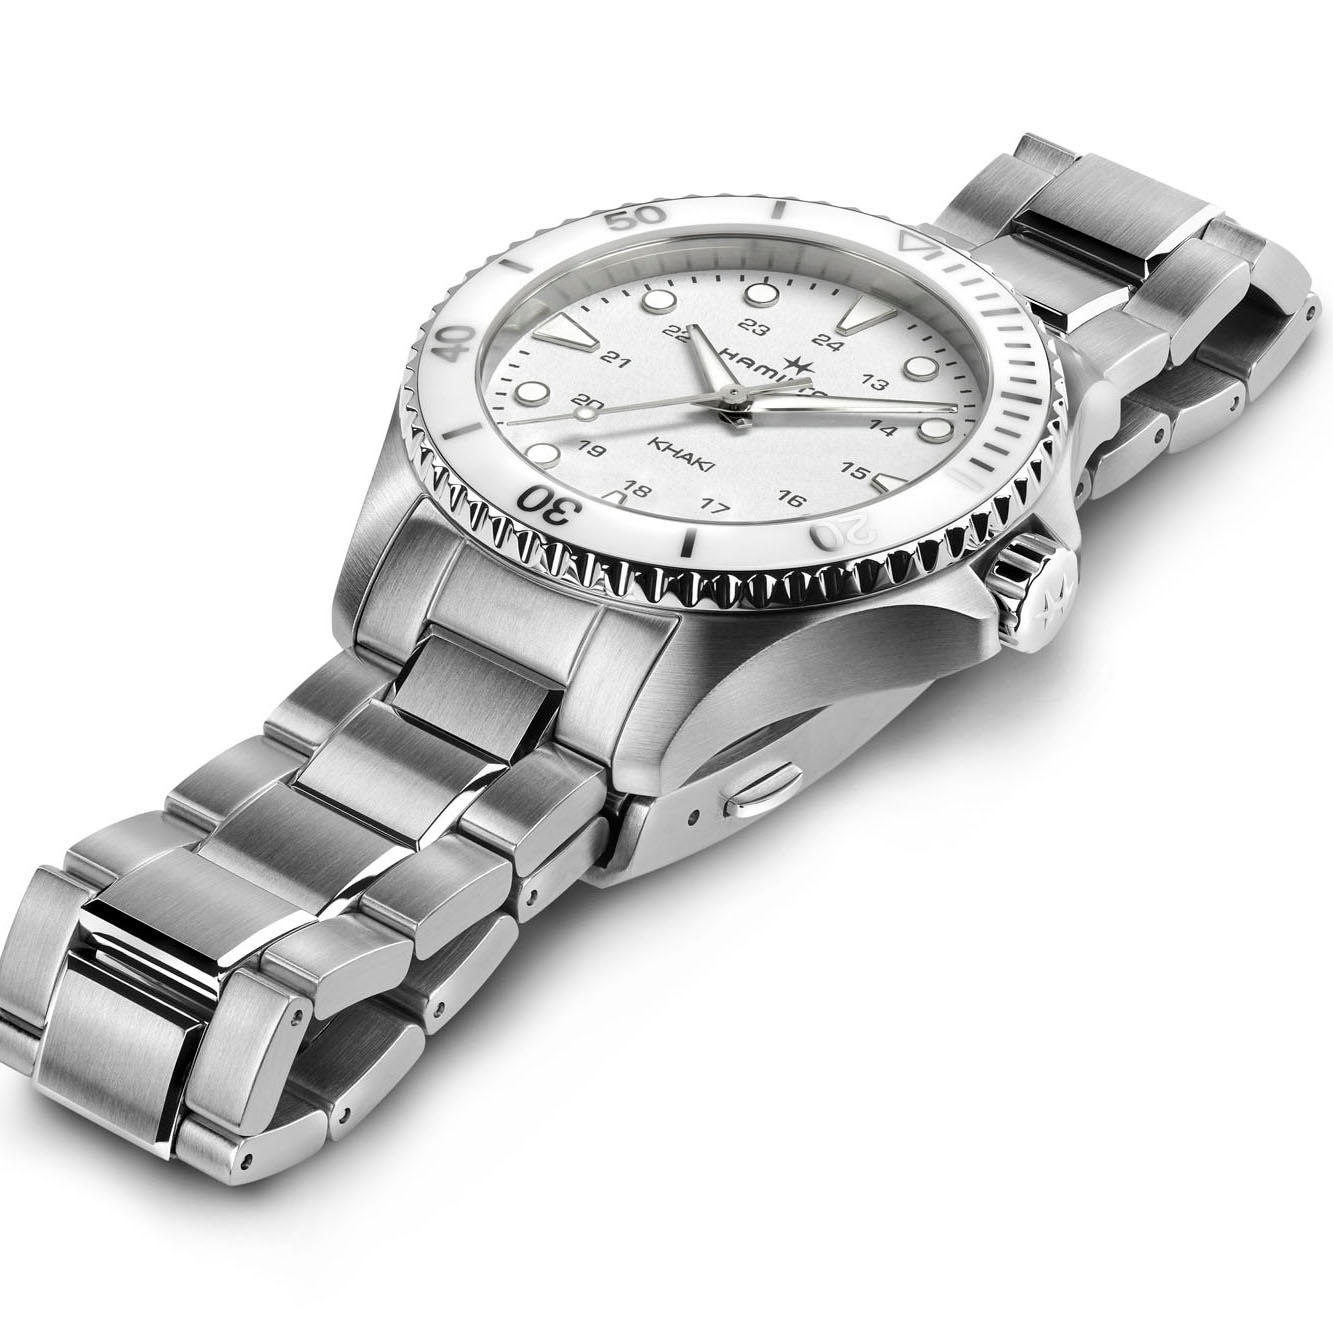 Khaki Navy Scuba Quartz - White dial - stainless steel bracelet